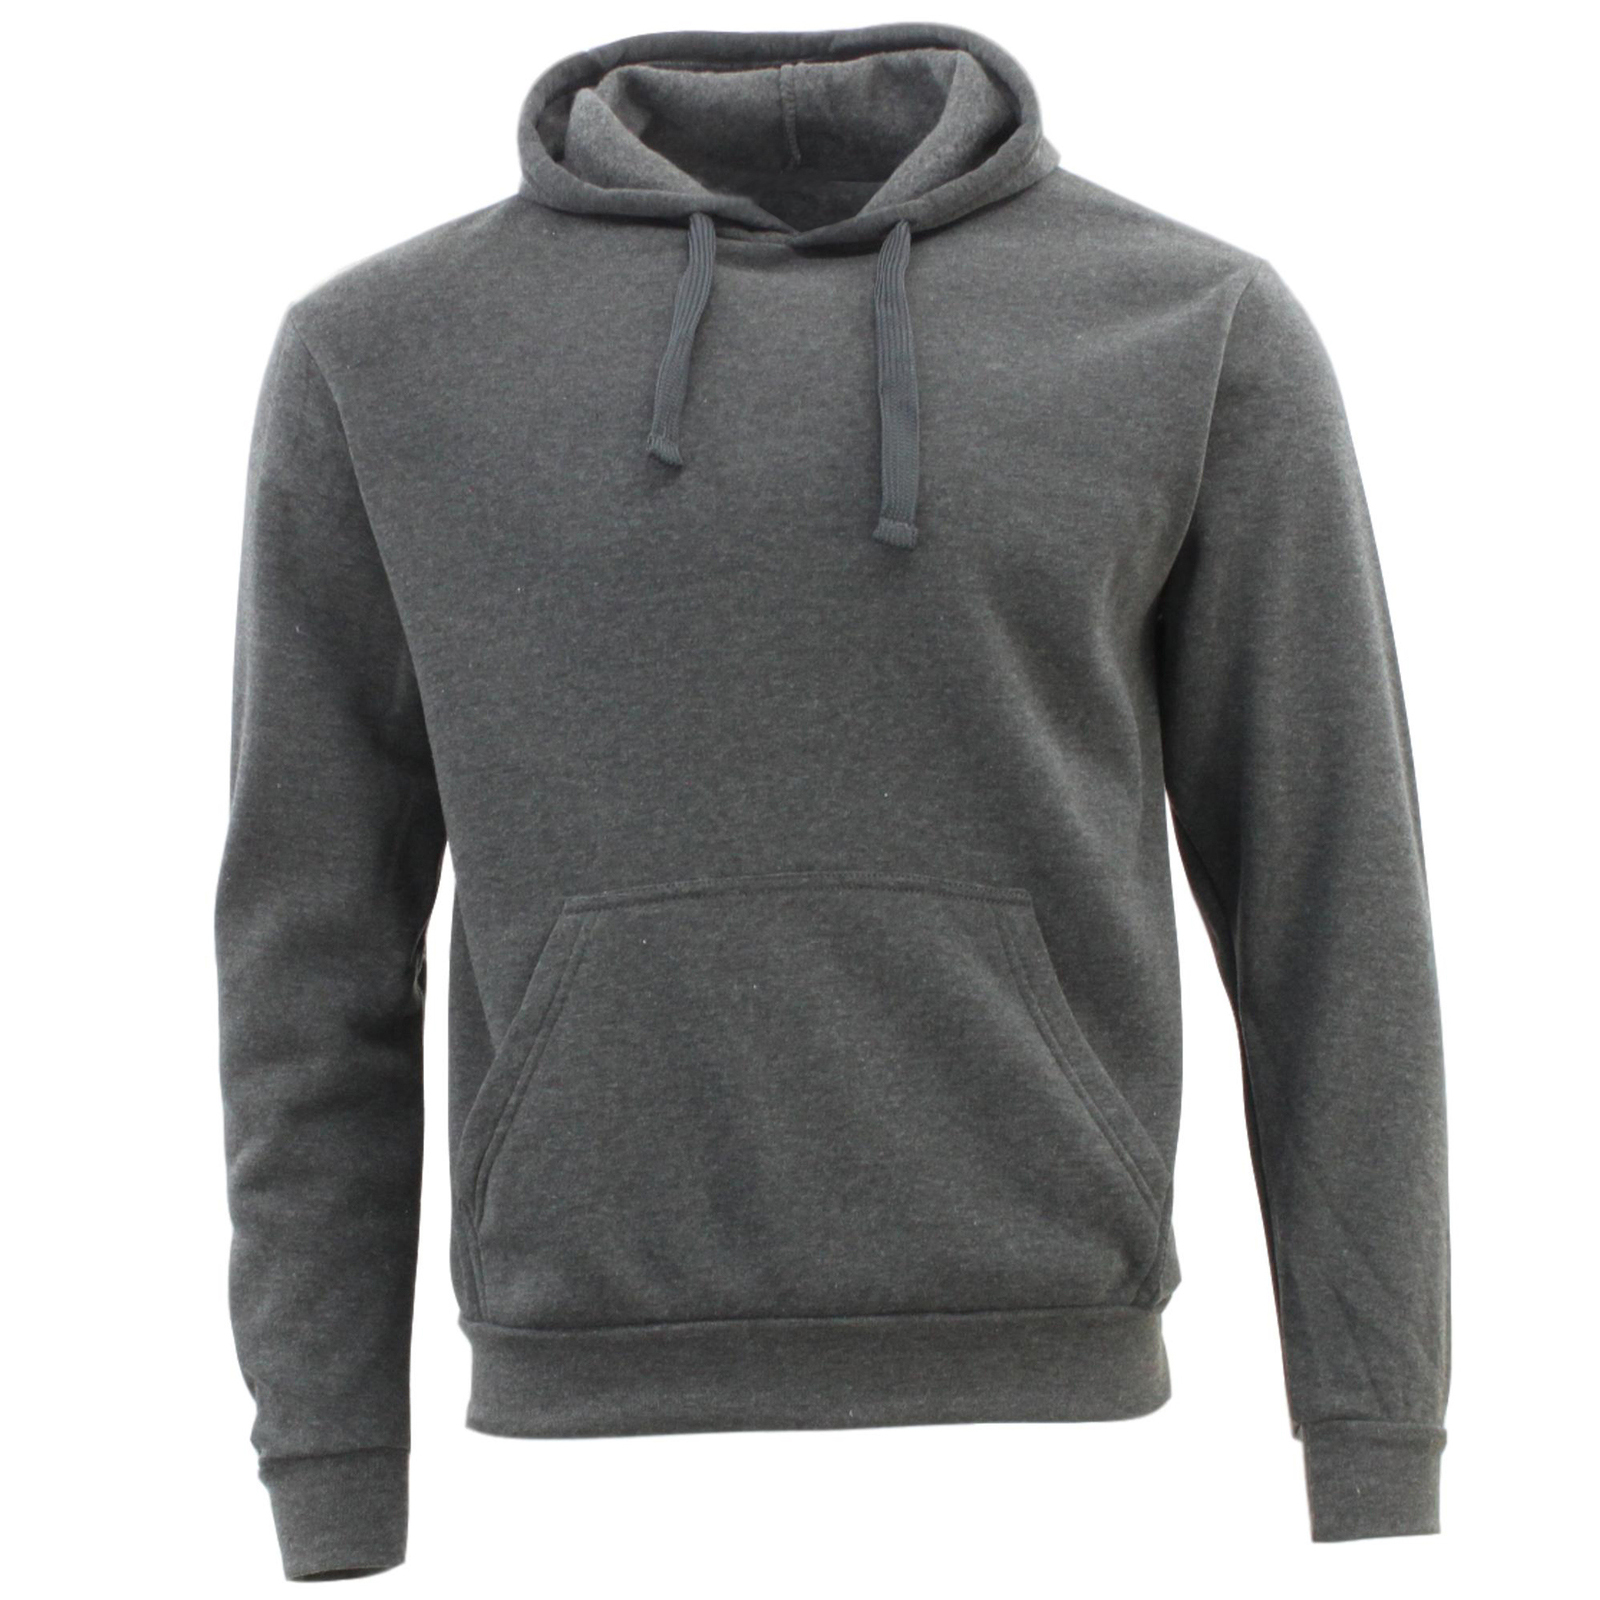 Adult Men's Unisex Basic Plain Hoodie Jumper Pullover Sweater Sweatshirt  XS-5XL